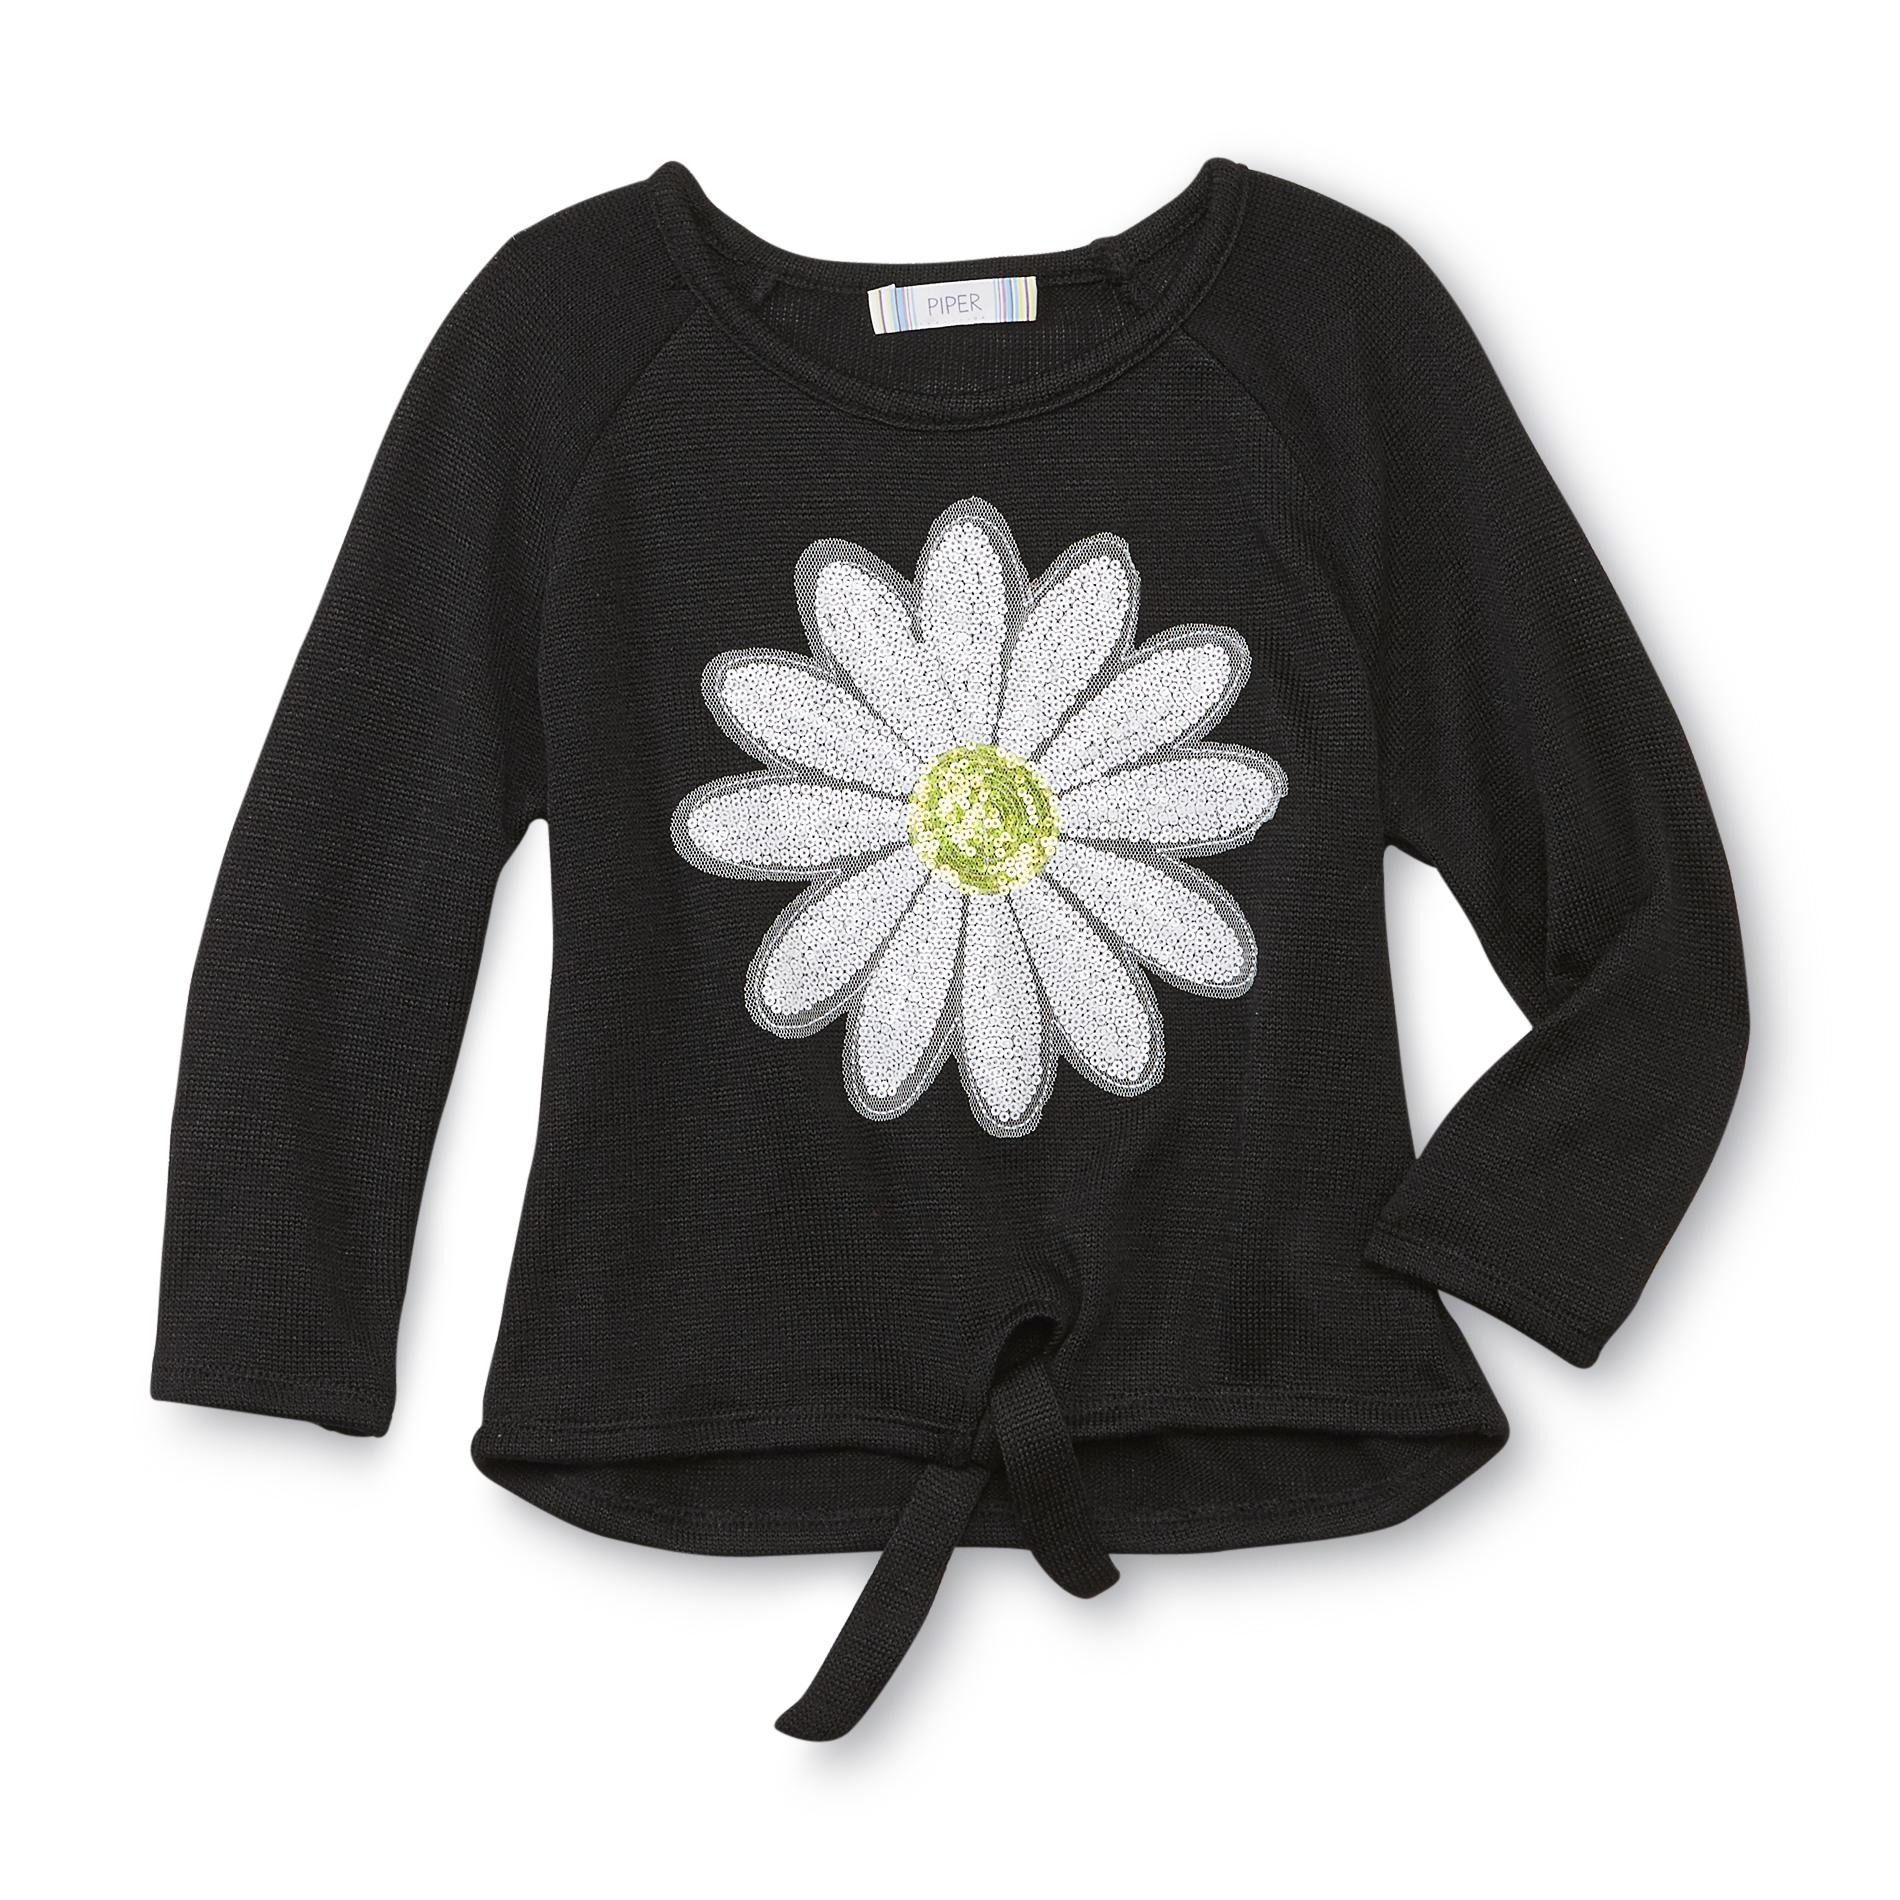 Piper Girl's Sequin Raglan Sweater - Daisy